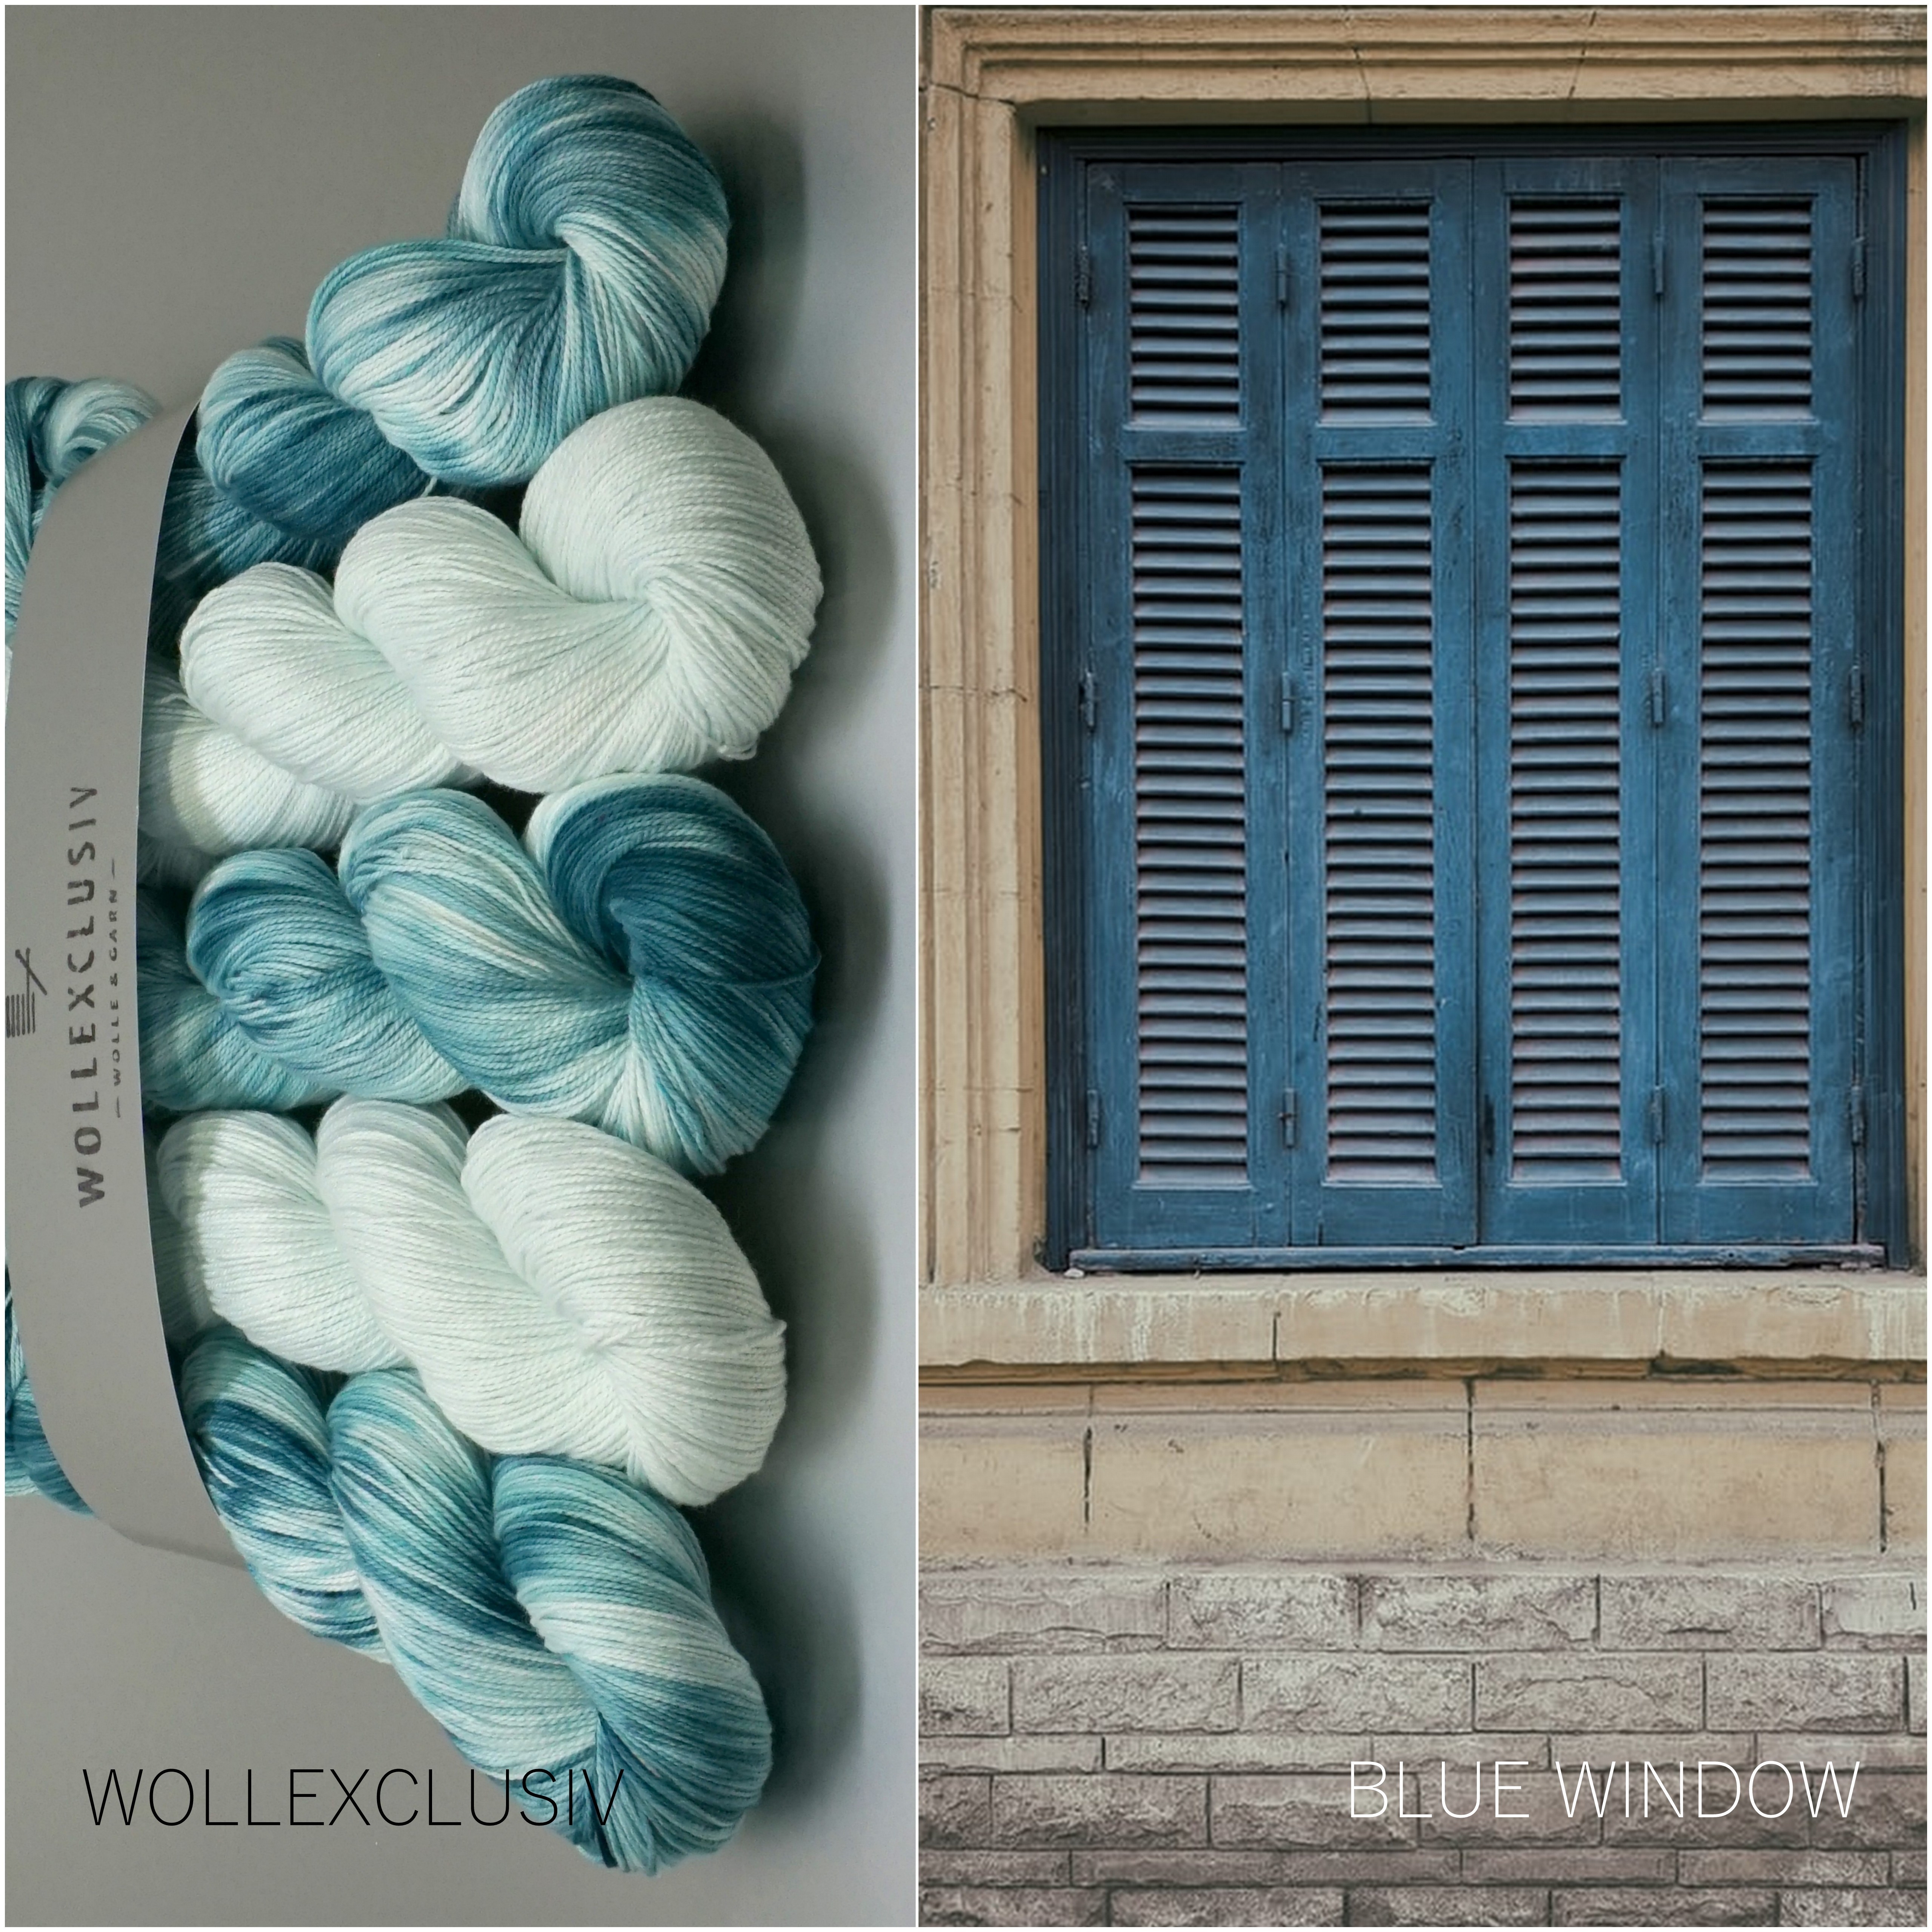 WOLLEXCLUSIV KIT COTTON LACE ∣ BLUE WINDOW